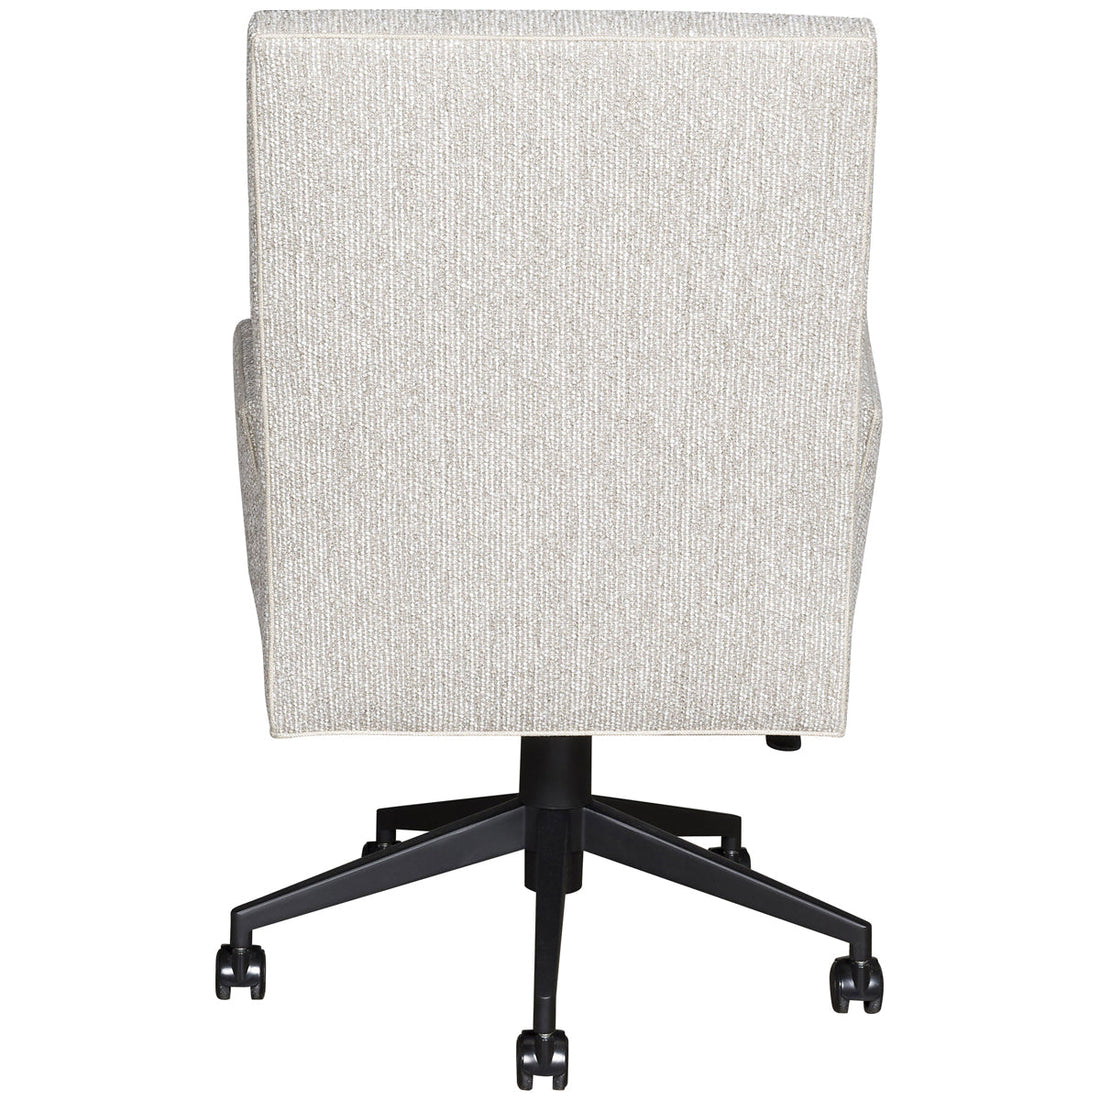 Vanguard Furniture Brattle Road Desk Chair